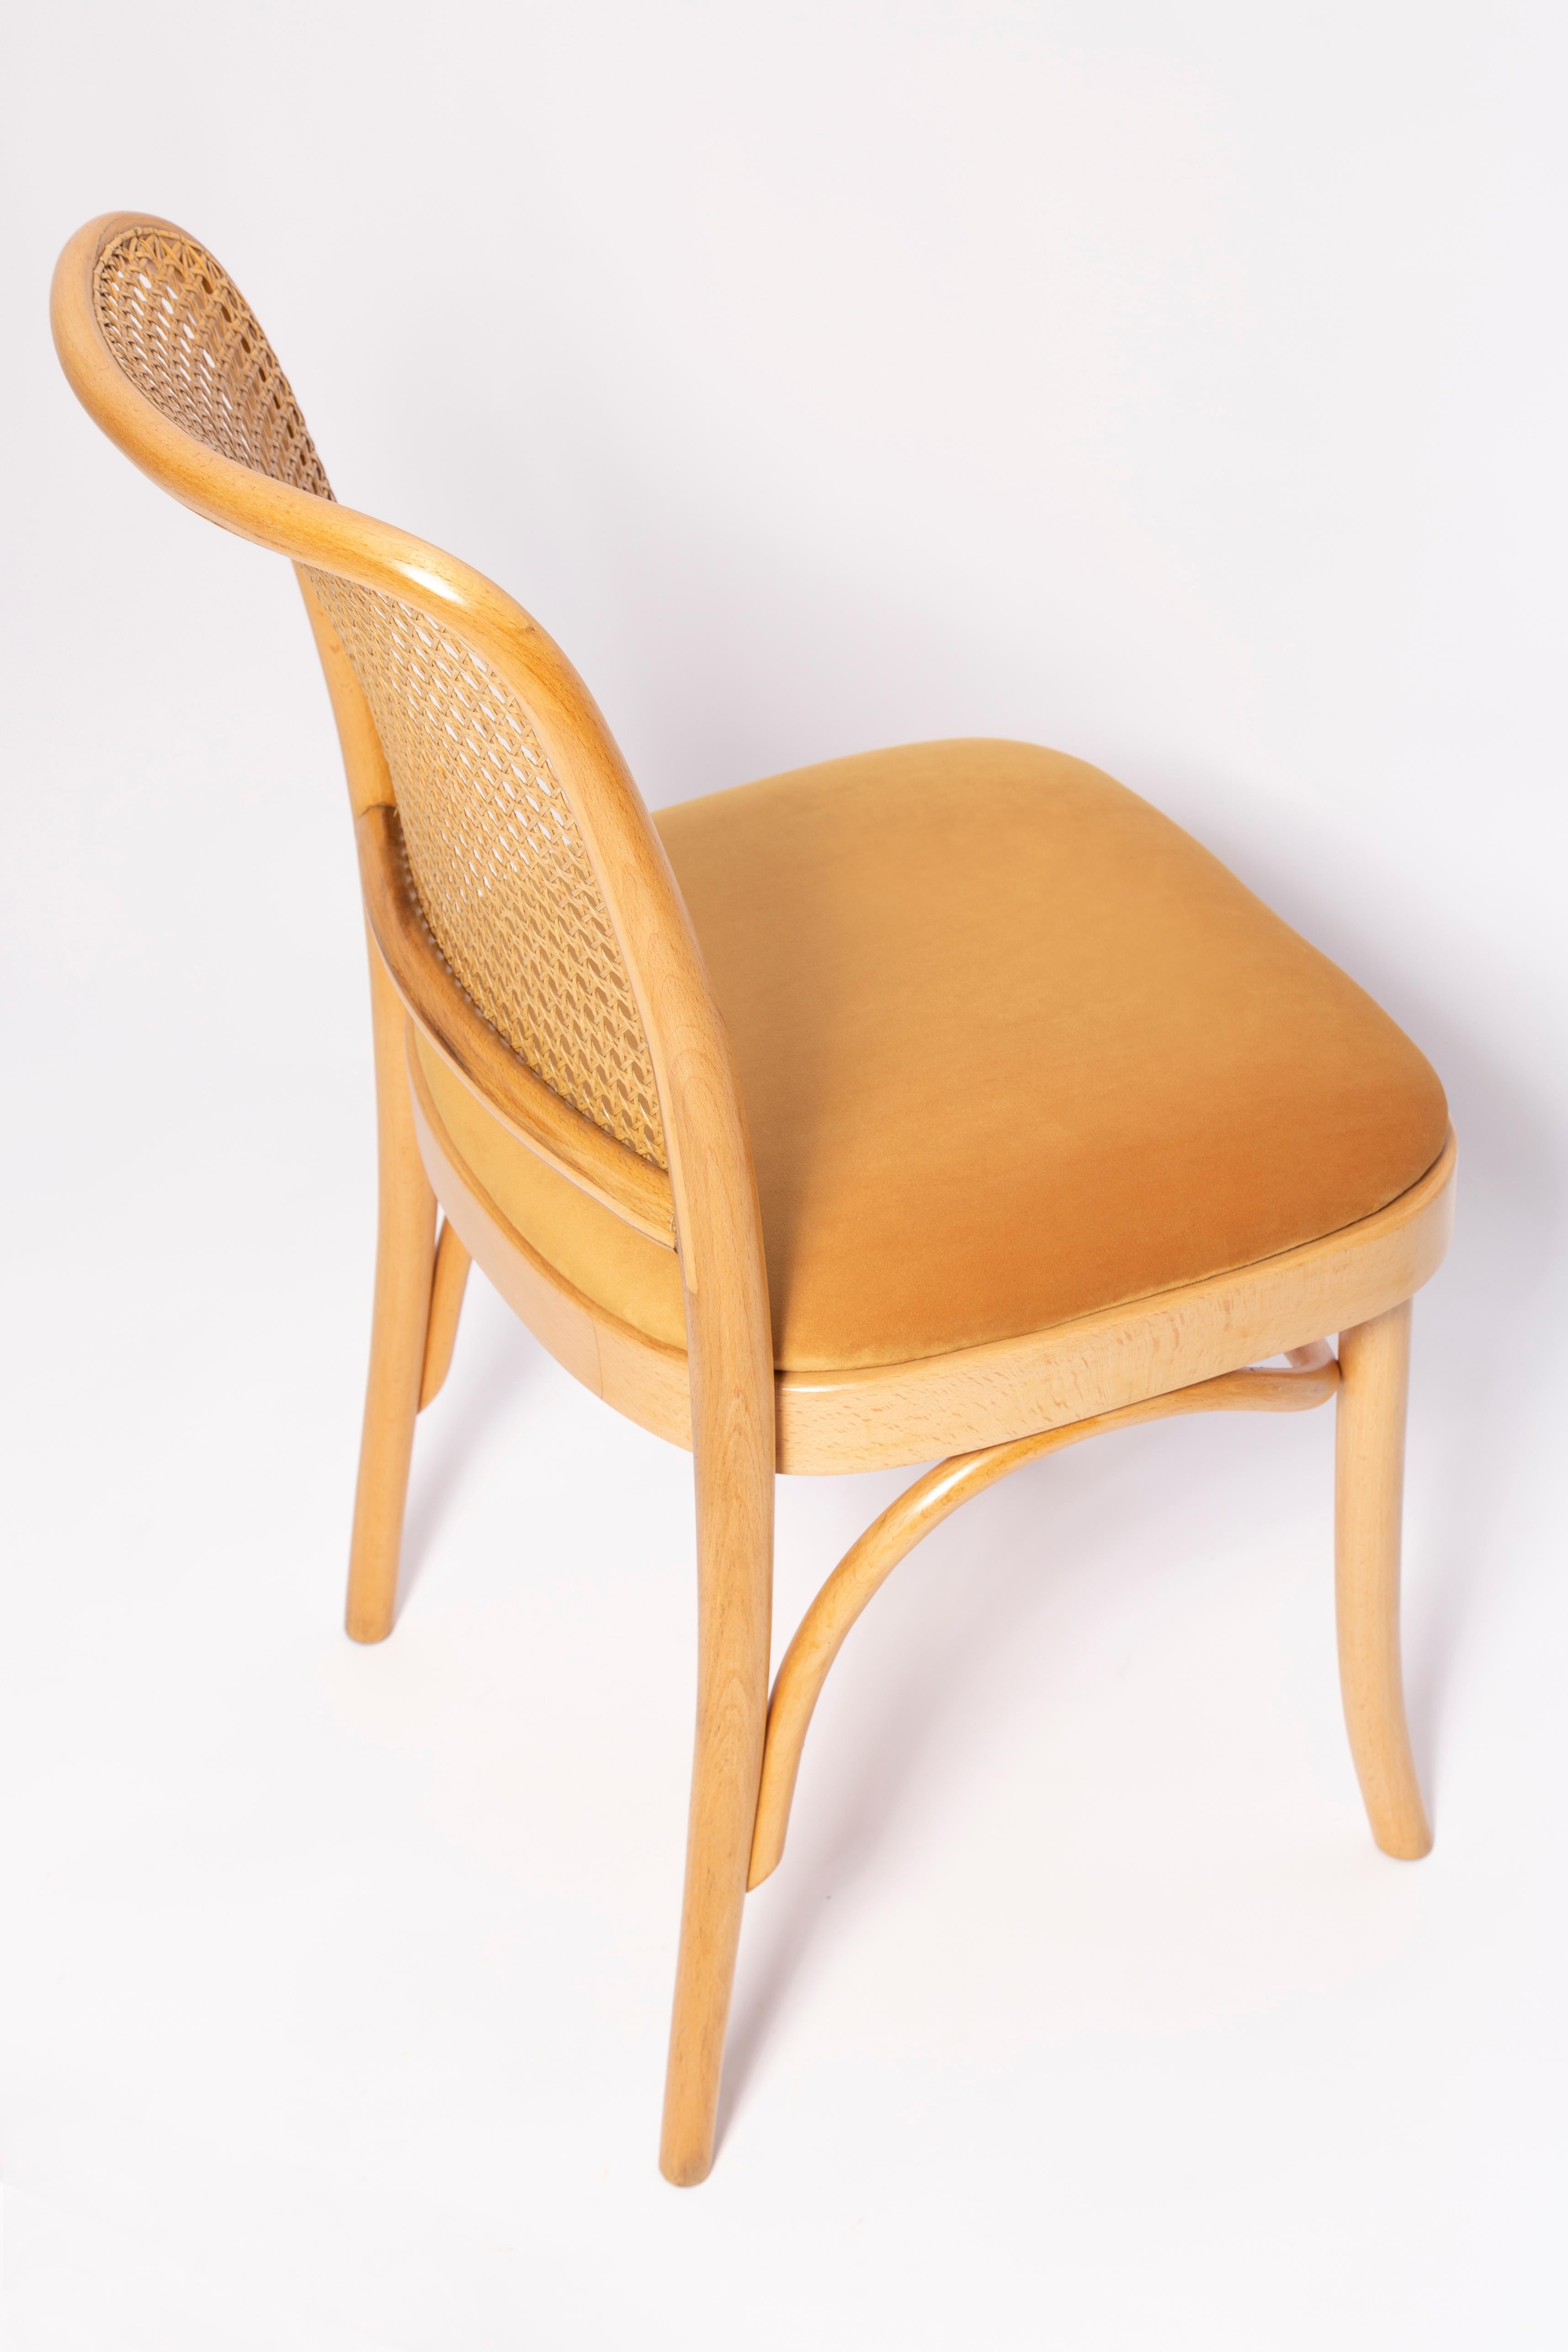 Mid-Century Yellow Velvet Thonet Wood Rattan Chair, Europe, 1960s For Sale 1